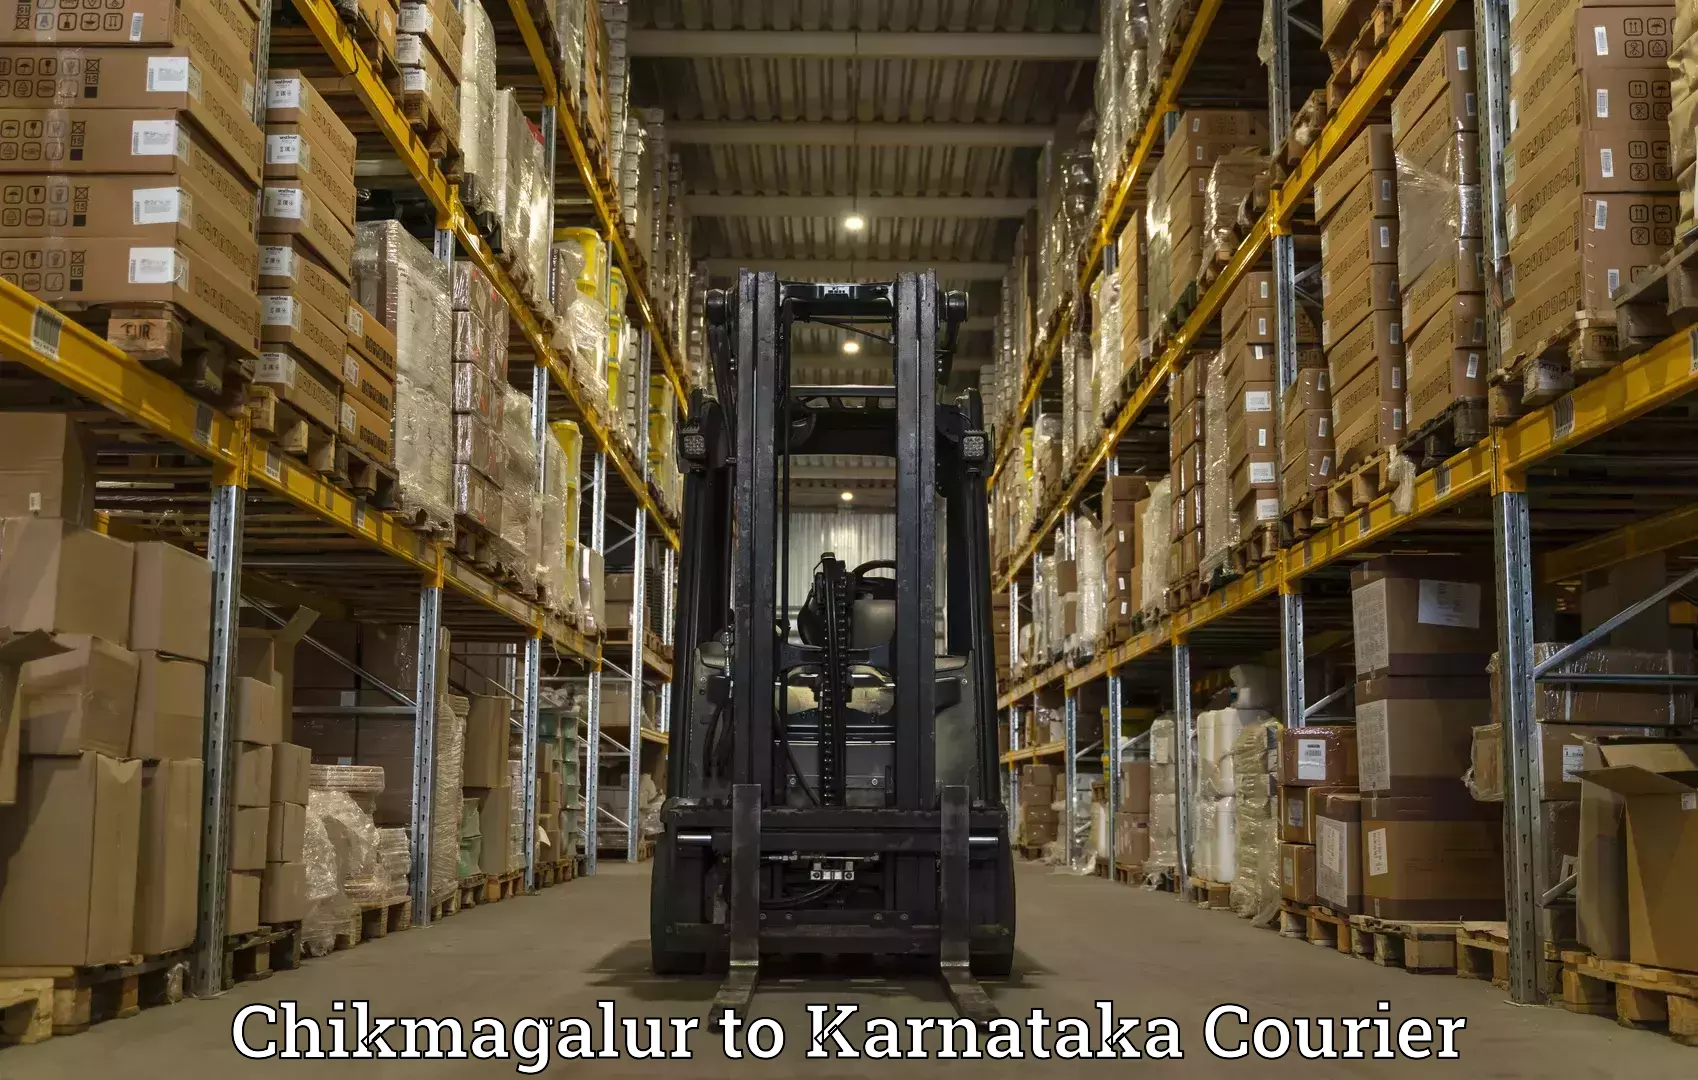 Logistics service provider Chikmagalur to Kalaburagi